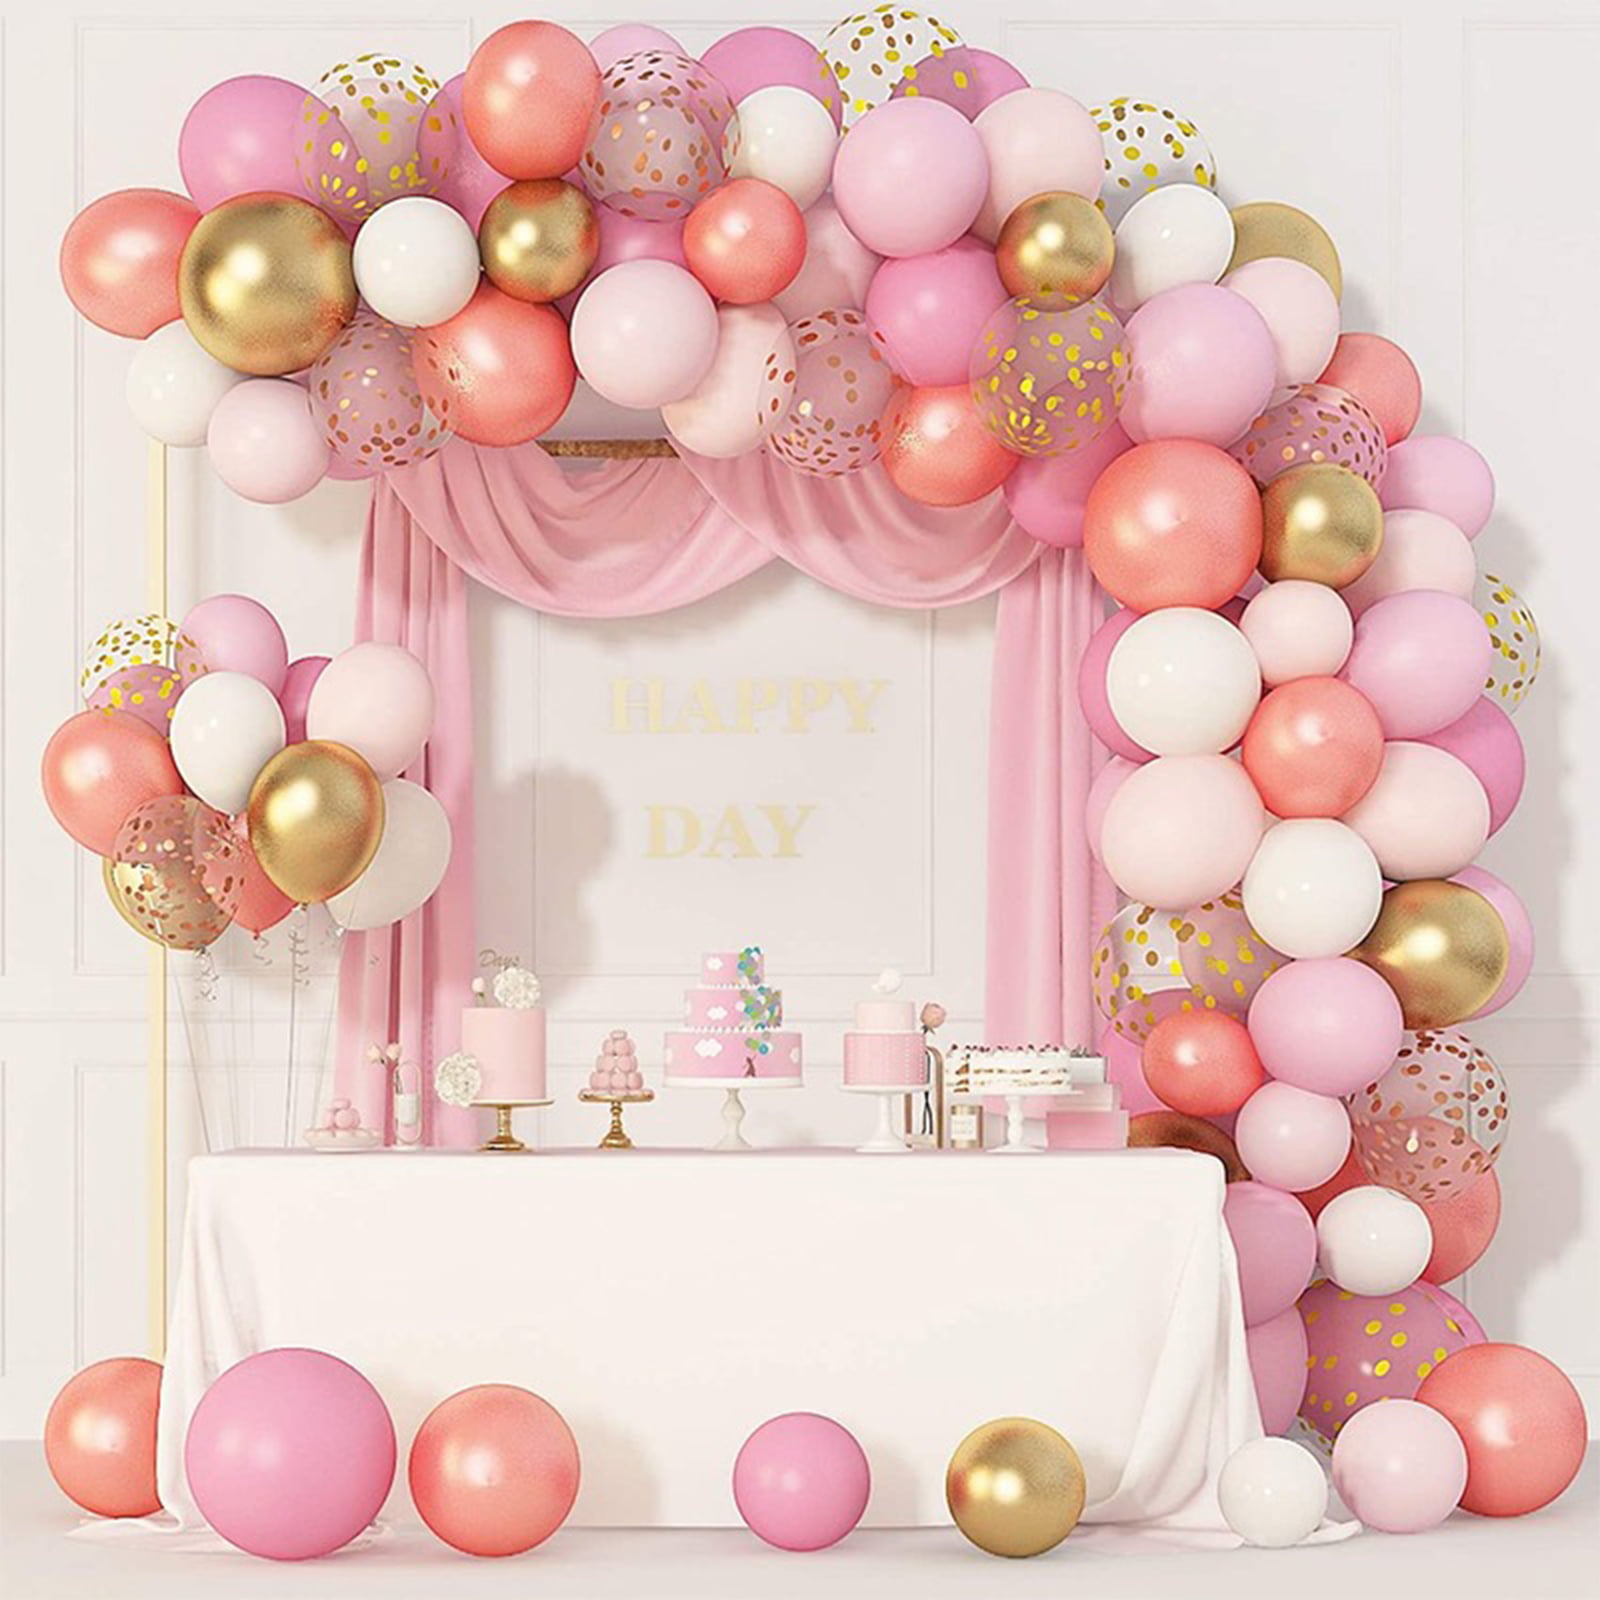 Rose Gold Balloons Confetti Set Chrome ballon Birthday deco Party Decoration US 